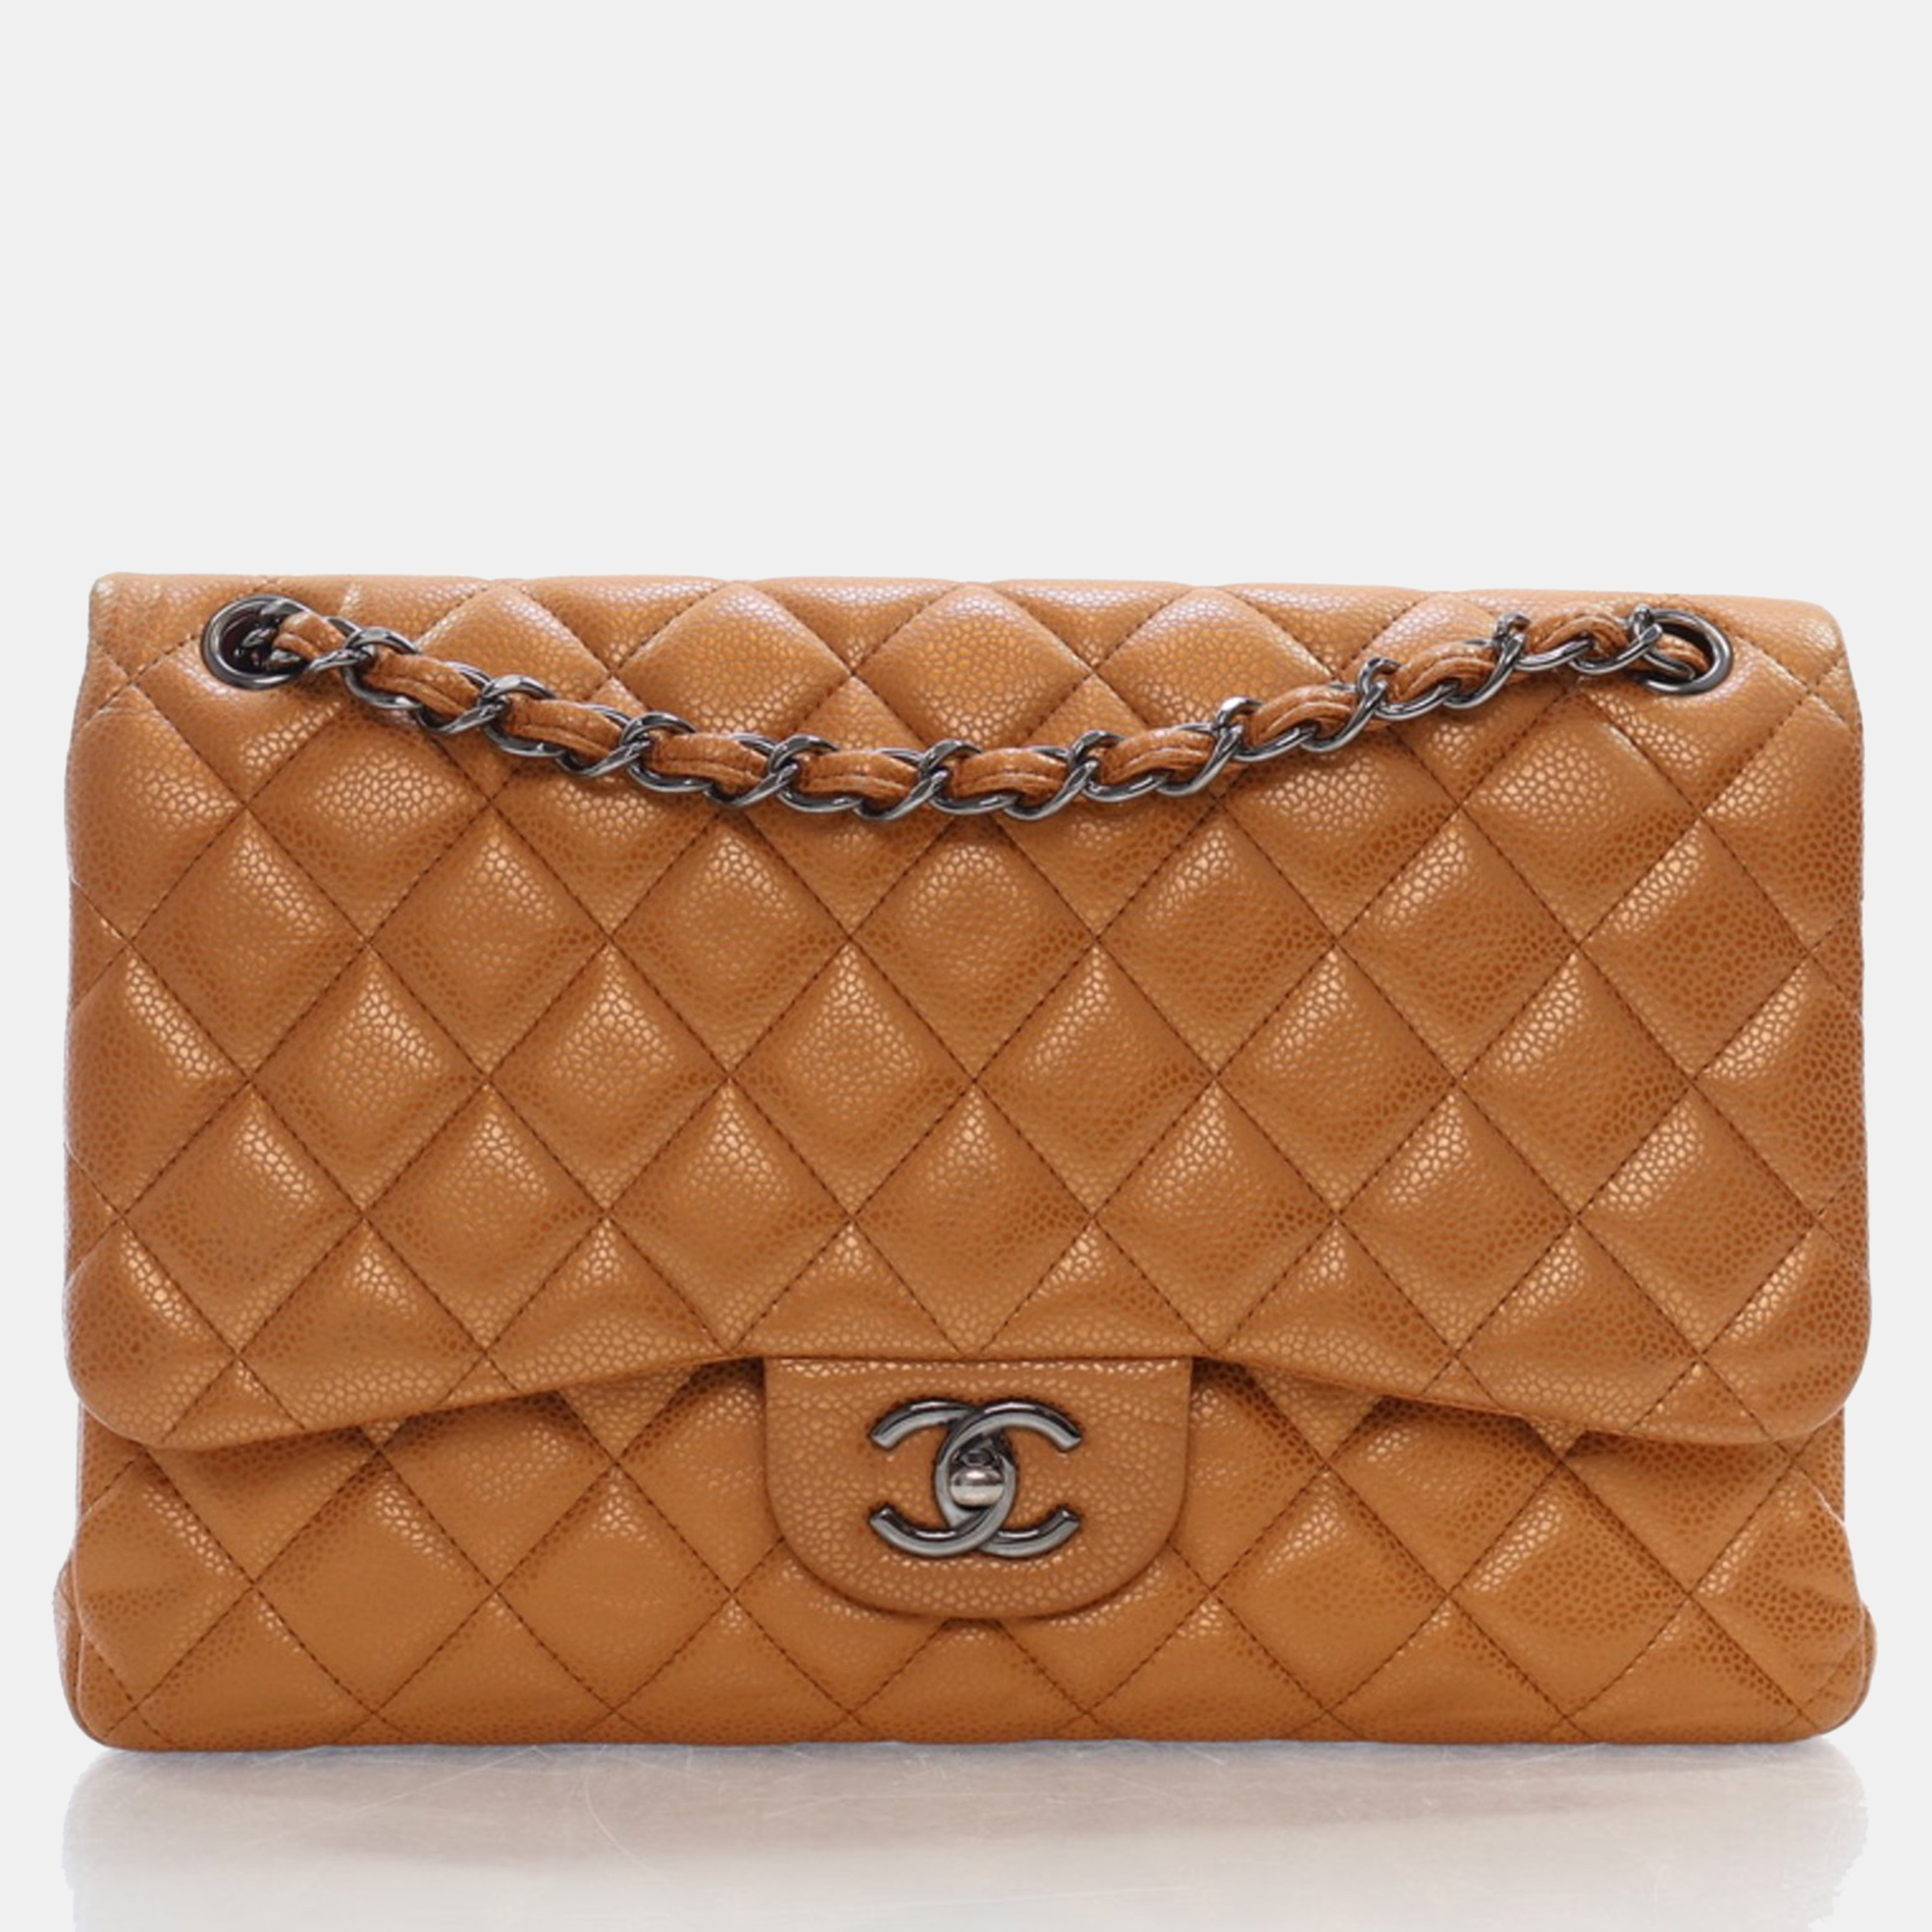 Chanel brpnze patent leather jumbo classic double flap shoulder bag